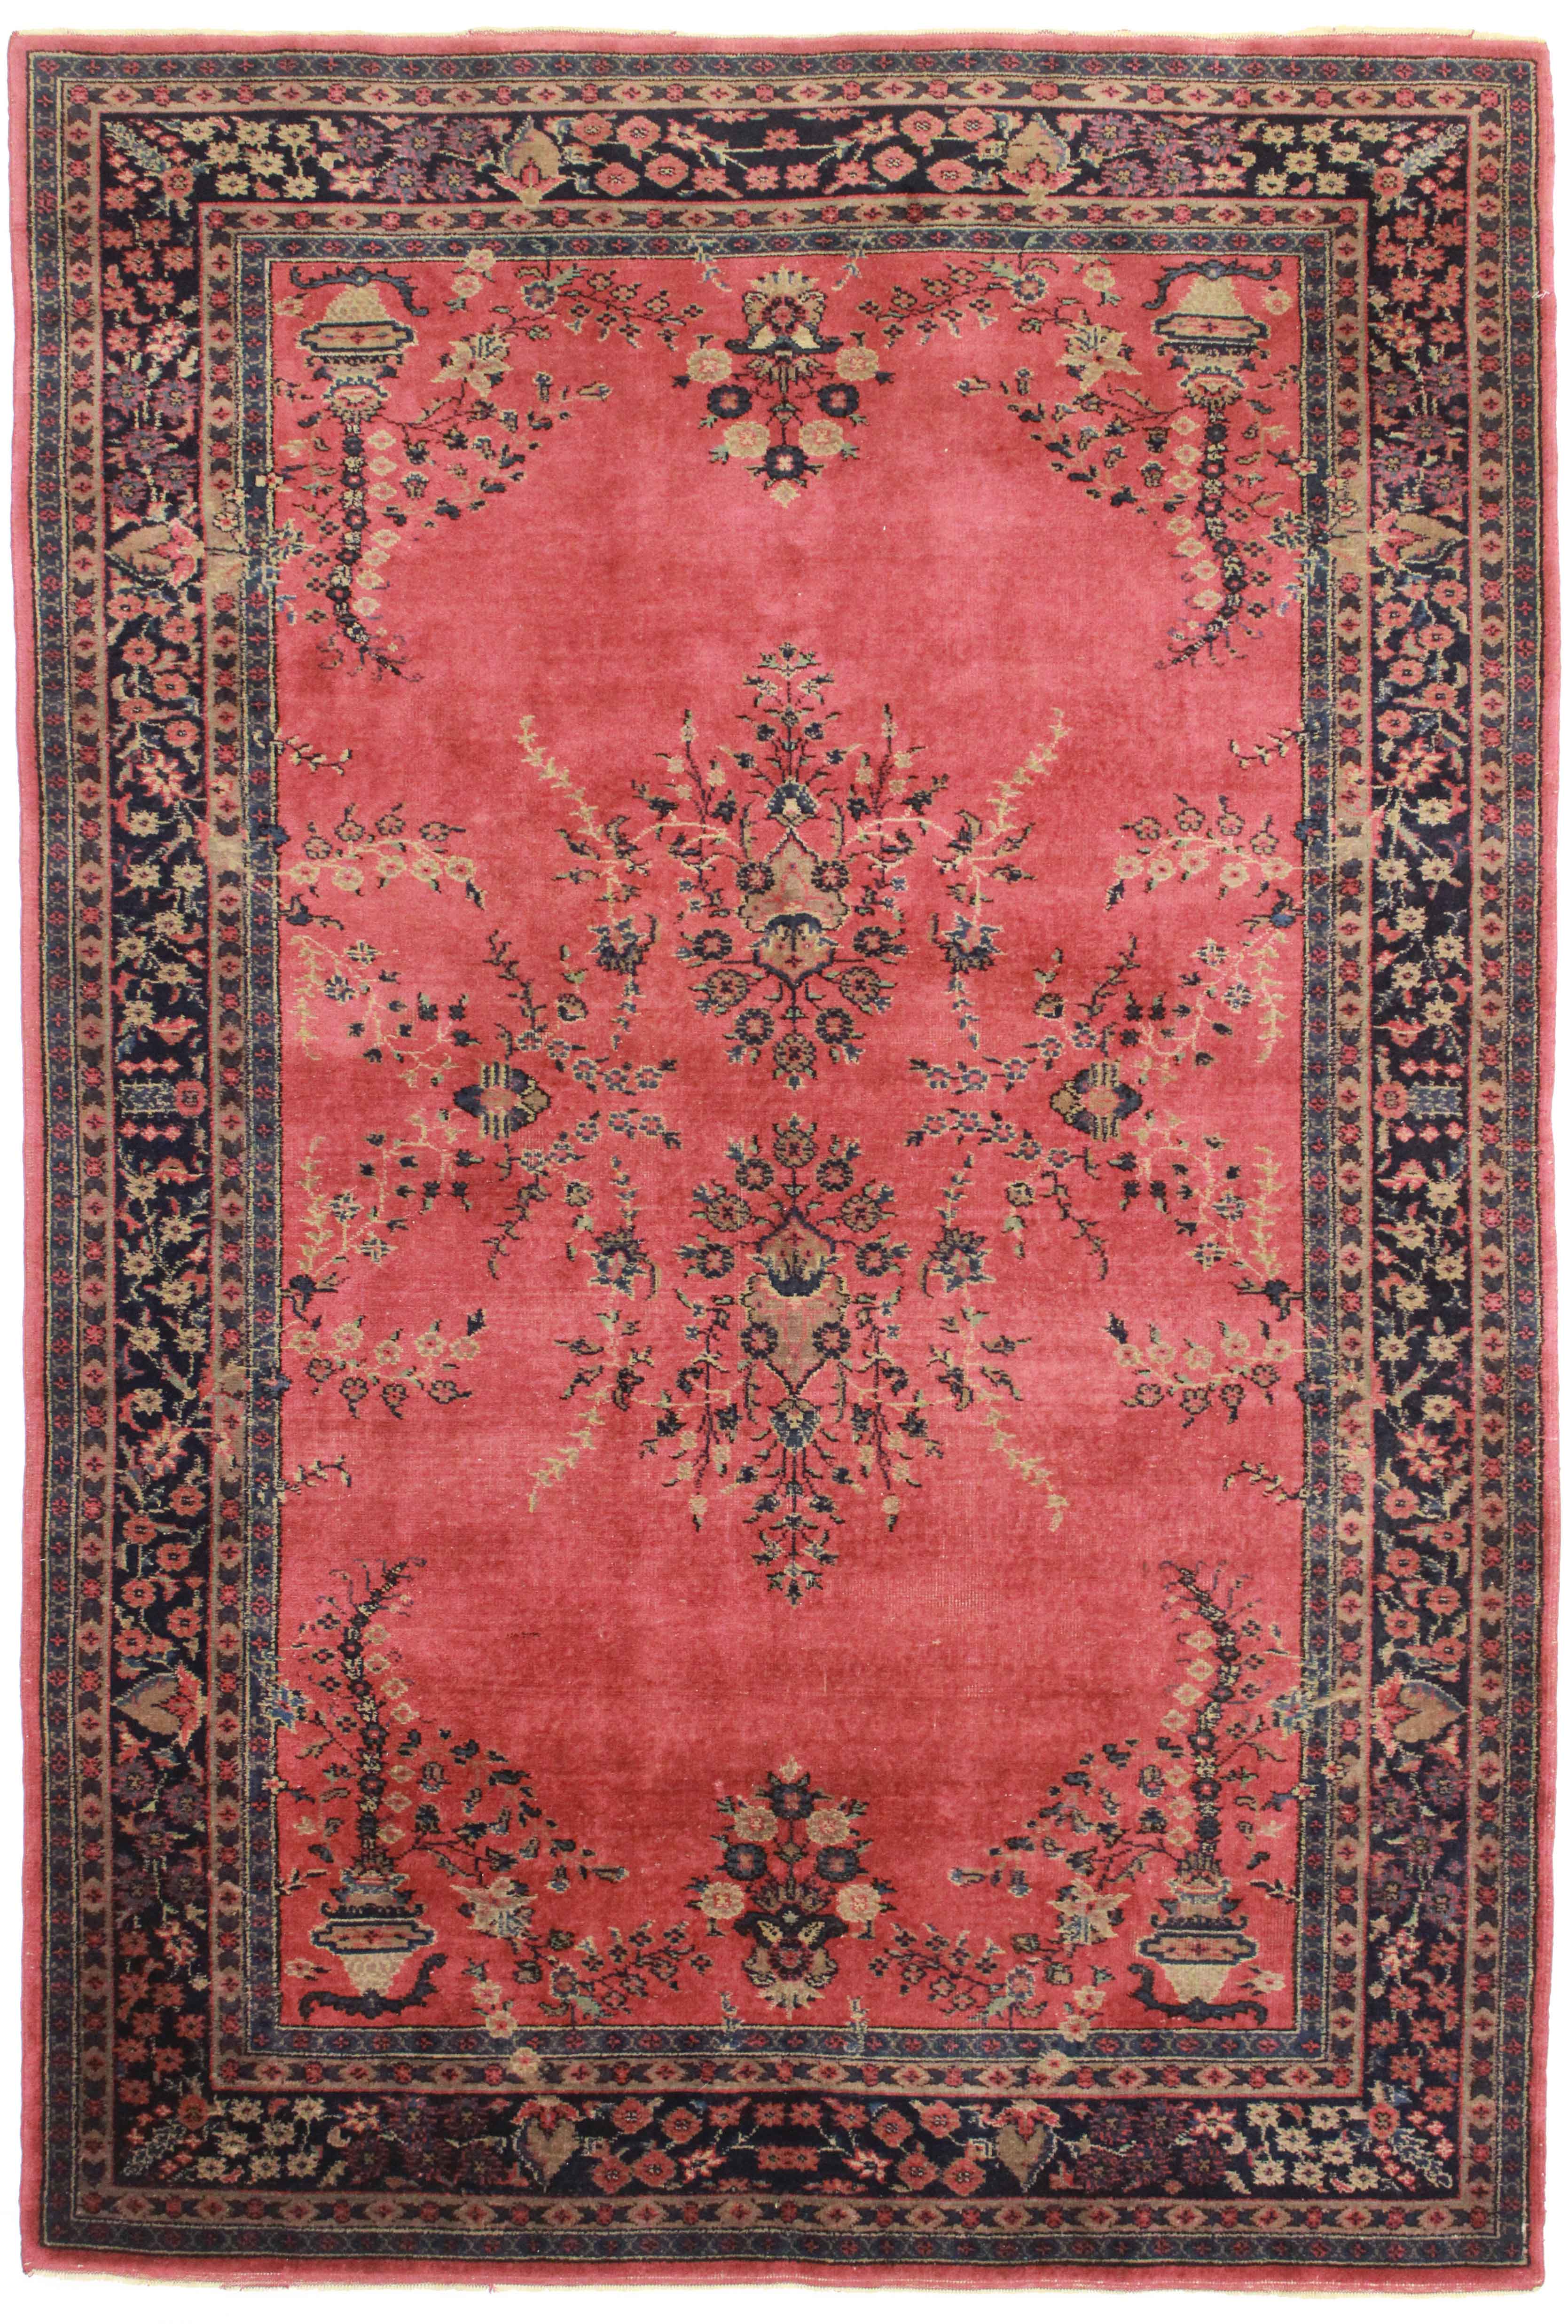 6 x 9 Antique Turkish Wool Rug 8810 | Exclusive Oriental Rugs